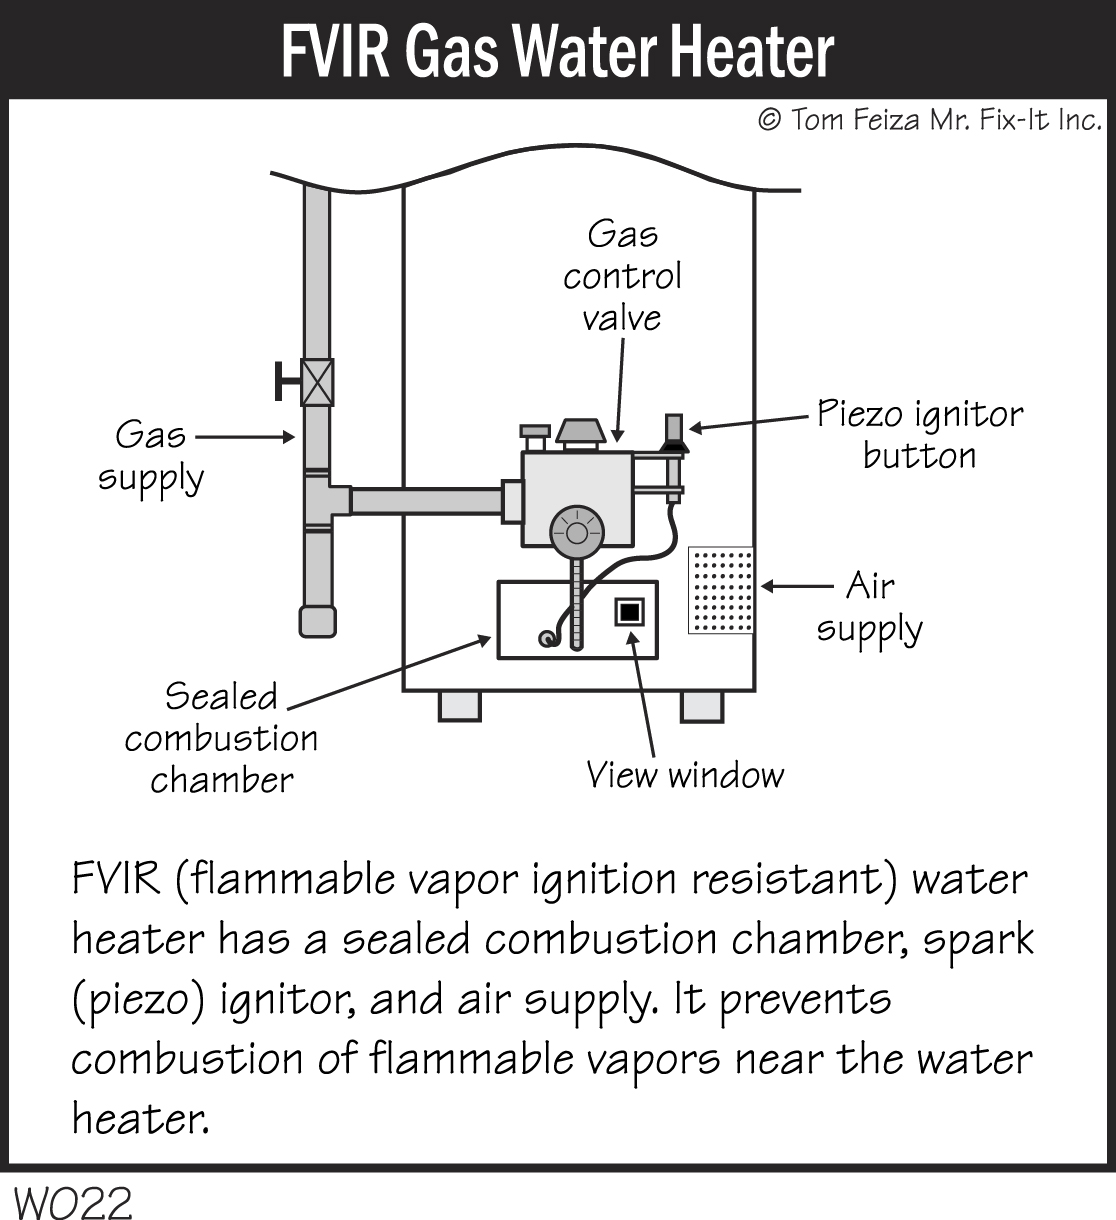 W022 - FVIR Gas Water Heater